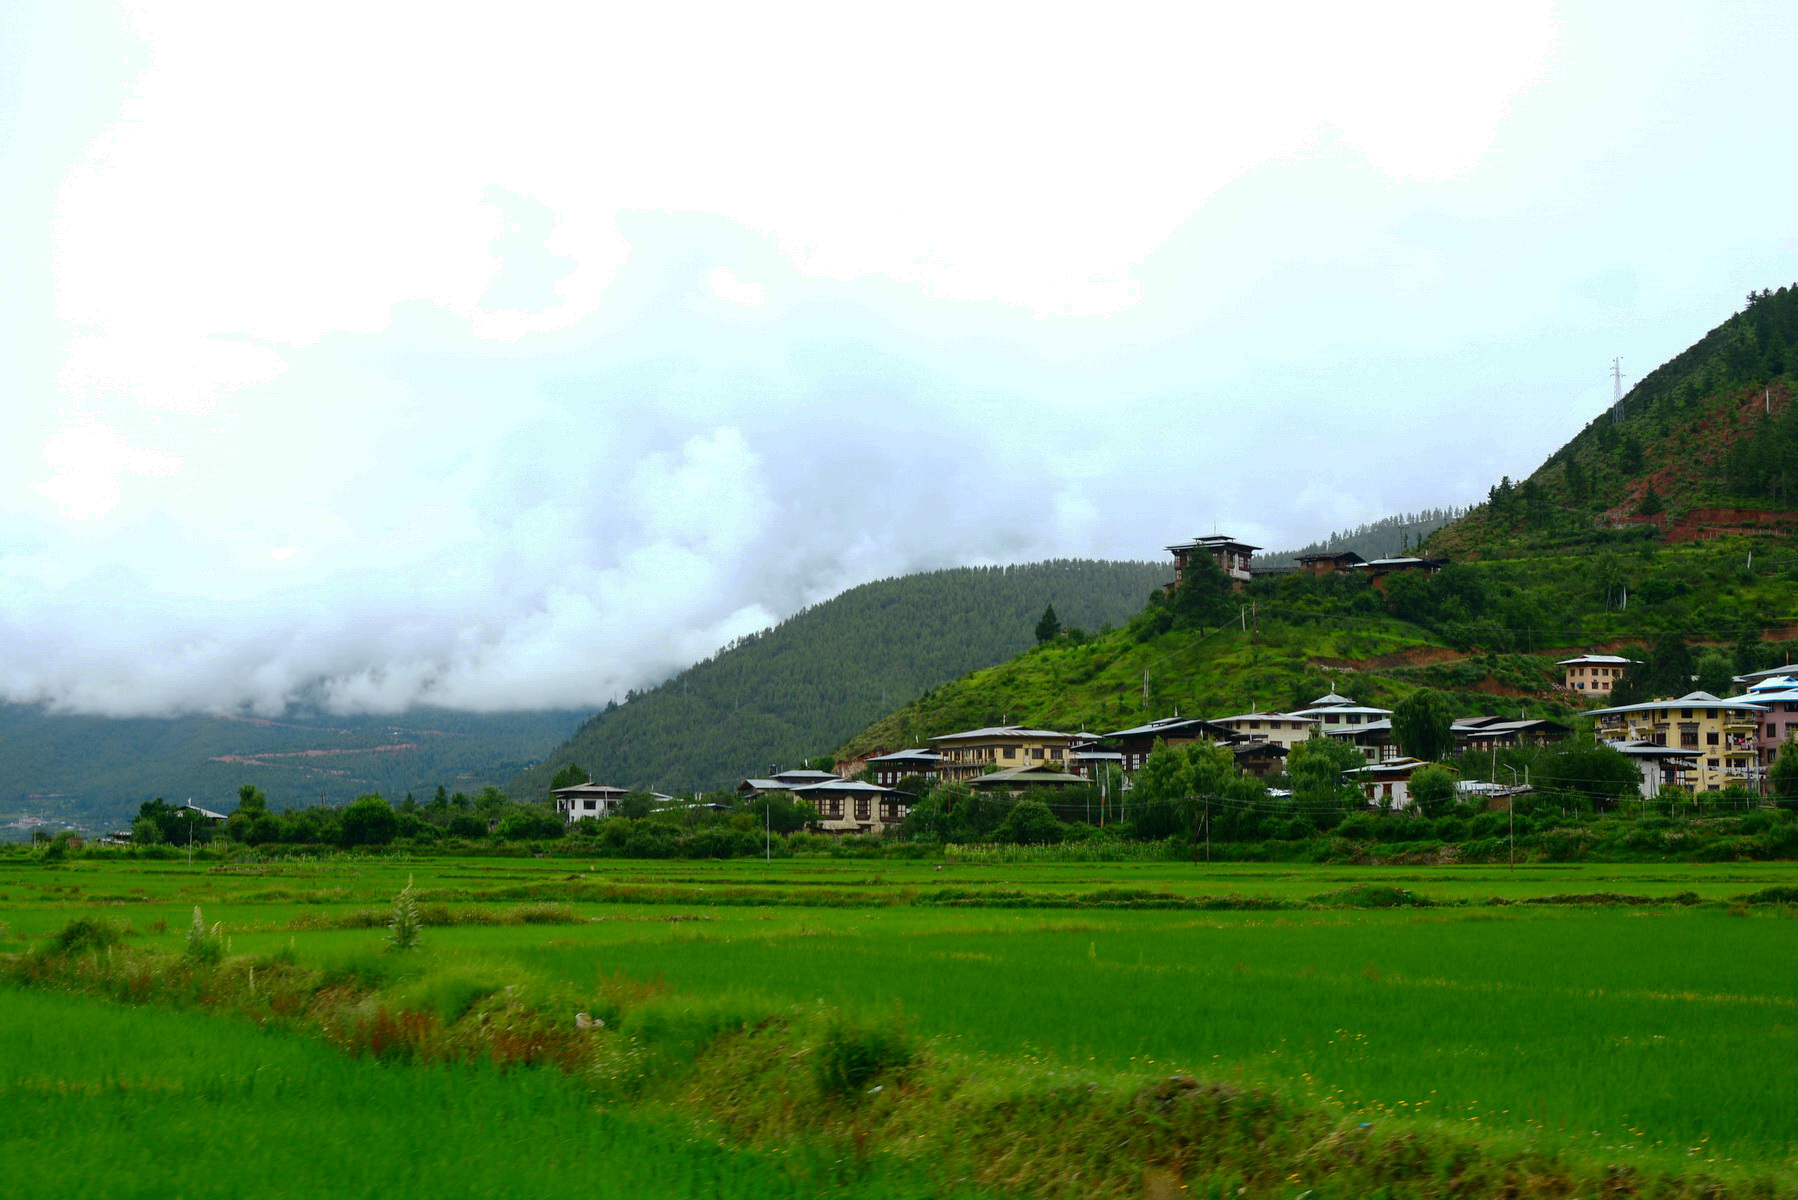 Scenery of Thimphu Bhutan